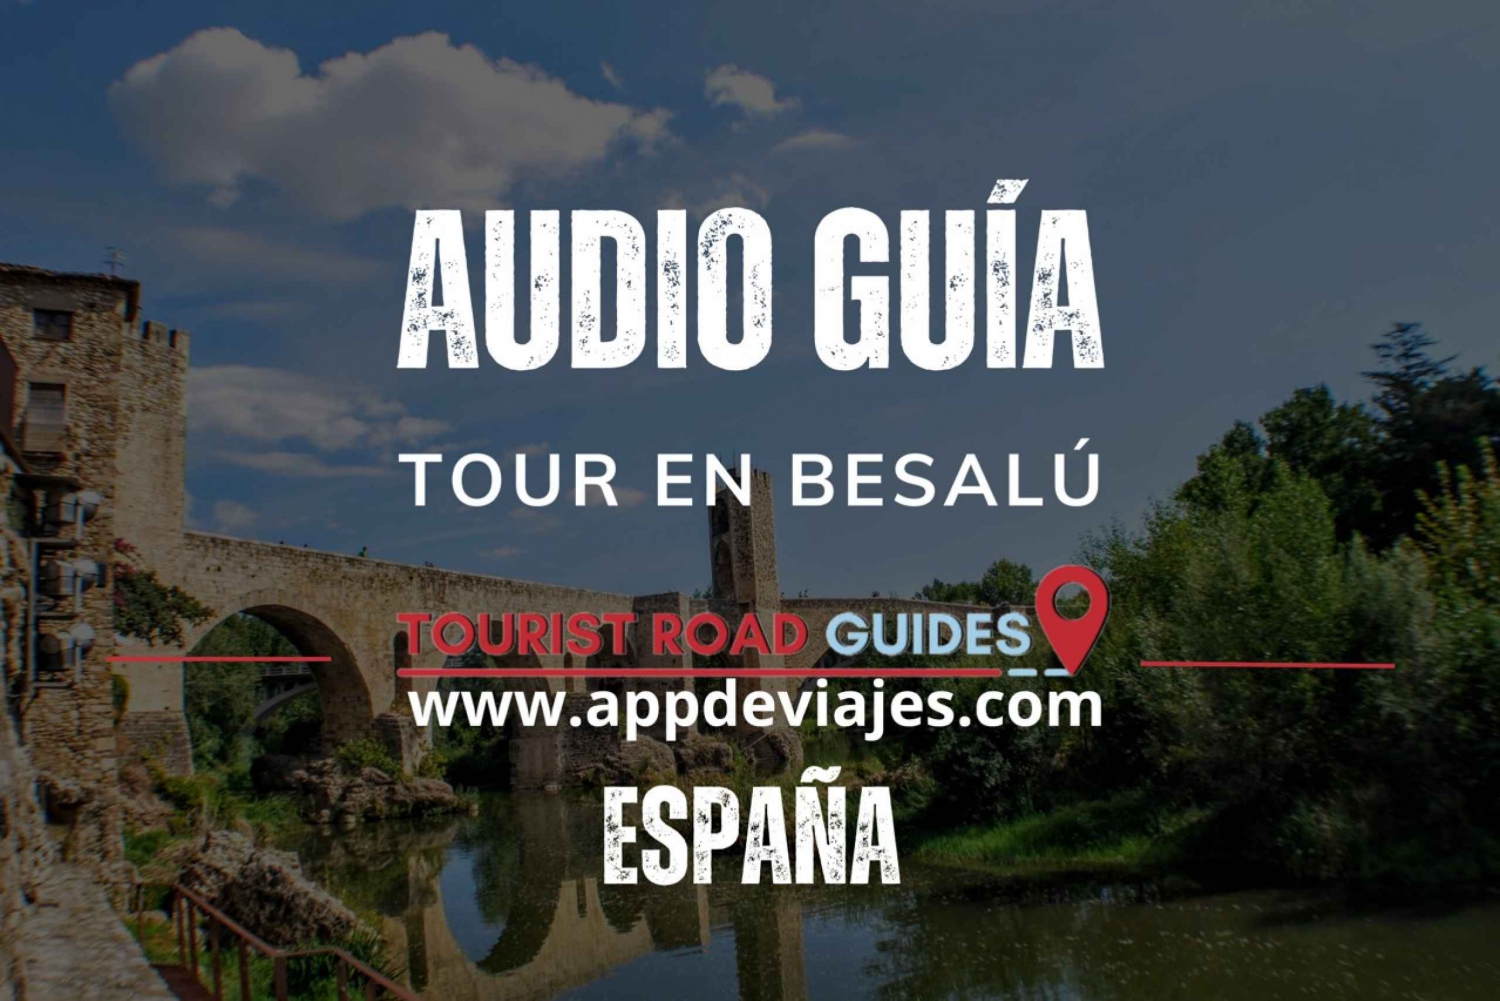 Tour Besalú self-guided tour app